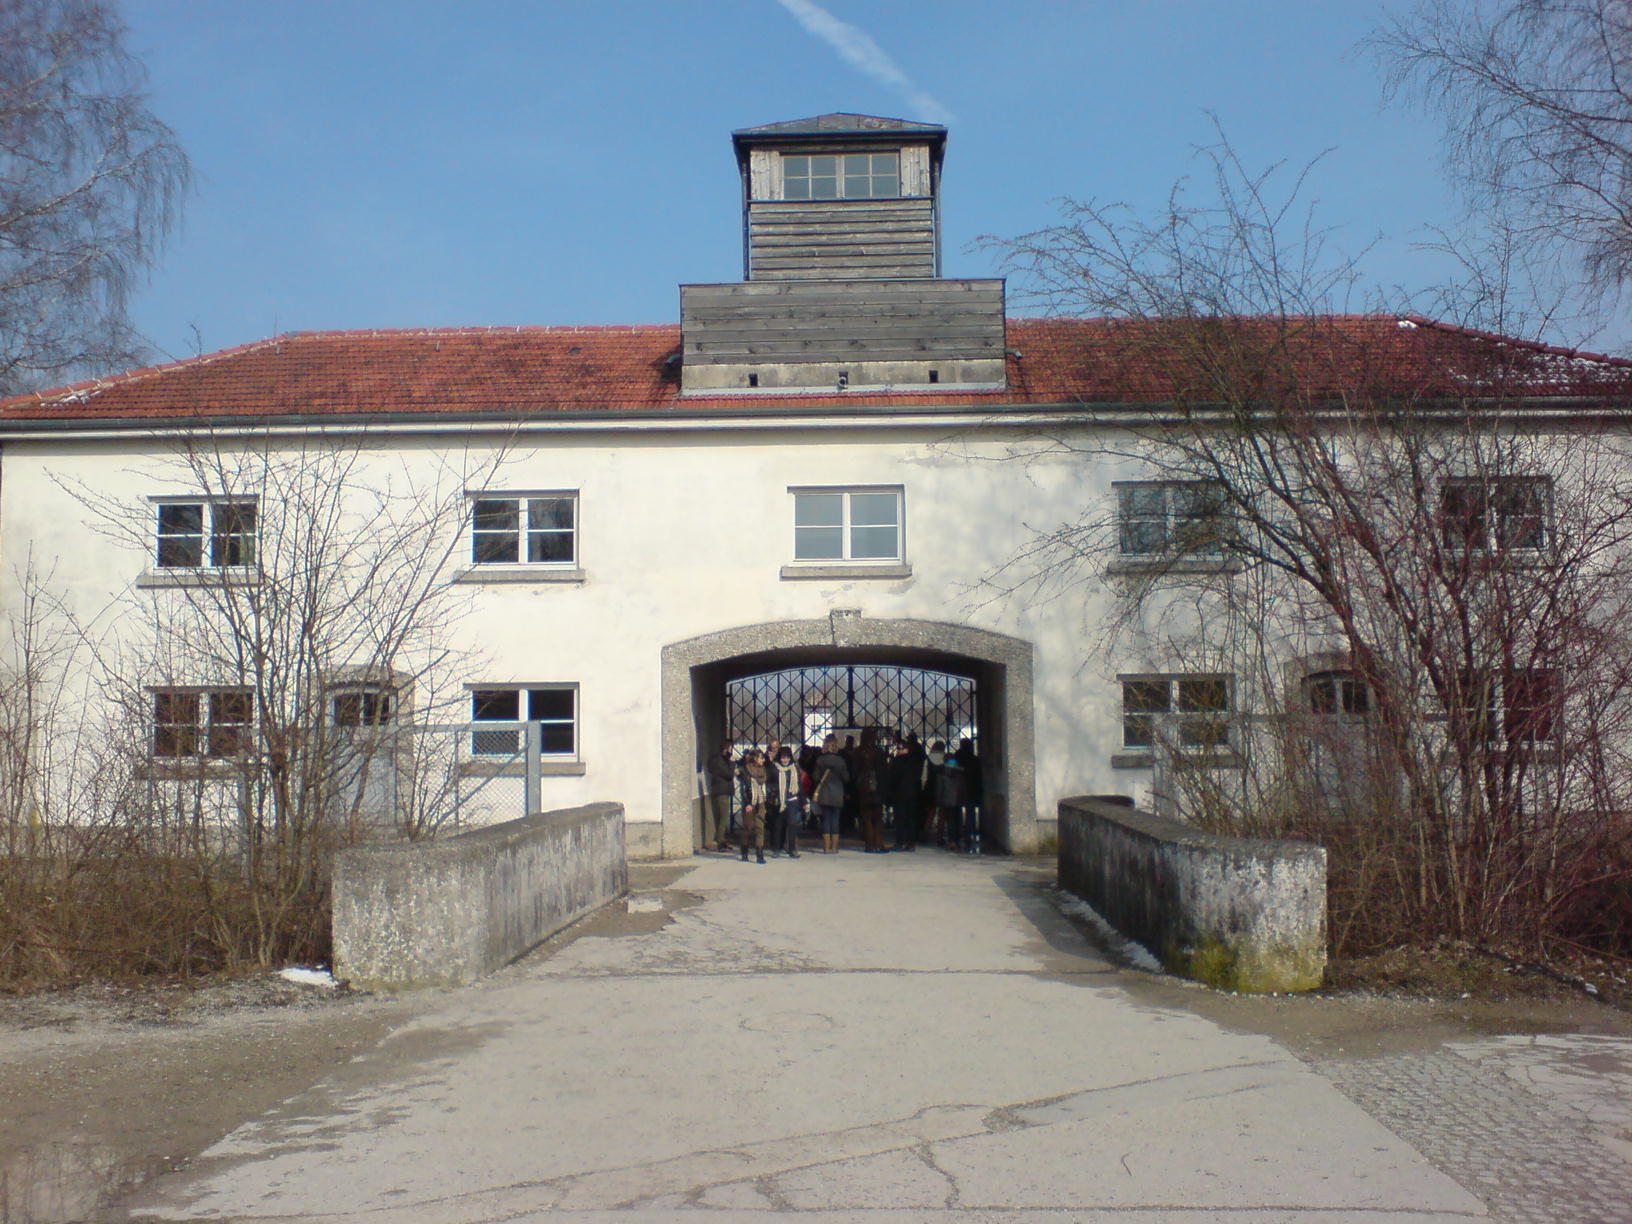 Jourhaus 2 at Dachau Concentration Camp | Munich Experience by Franz Schega